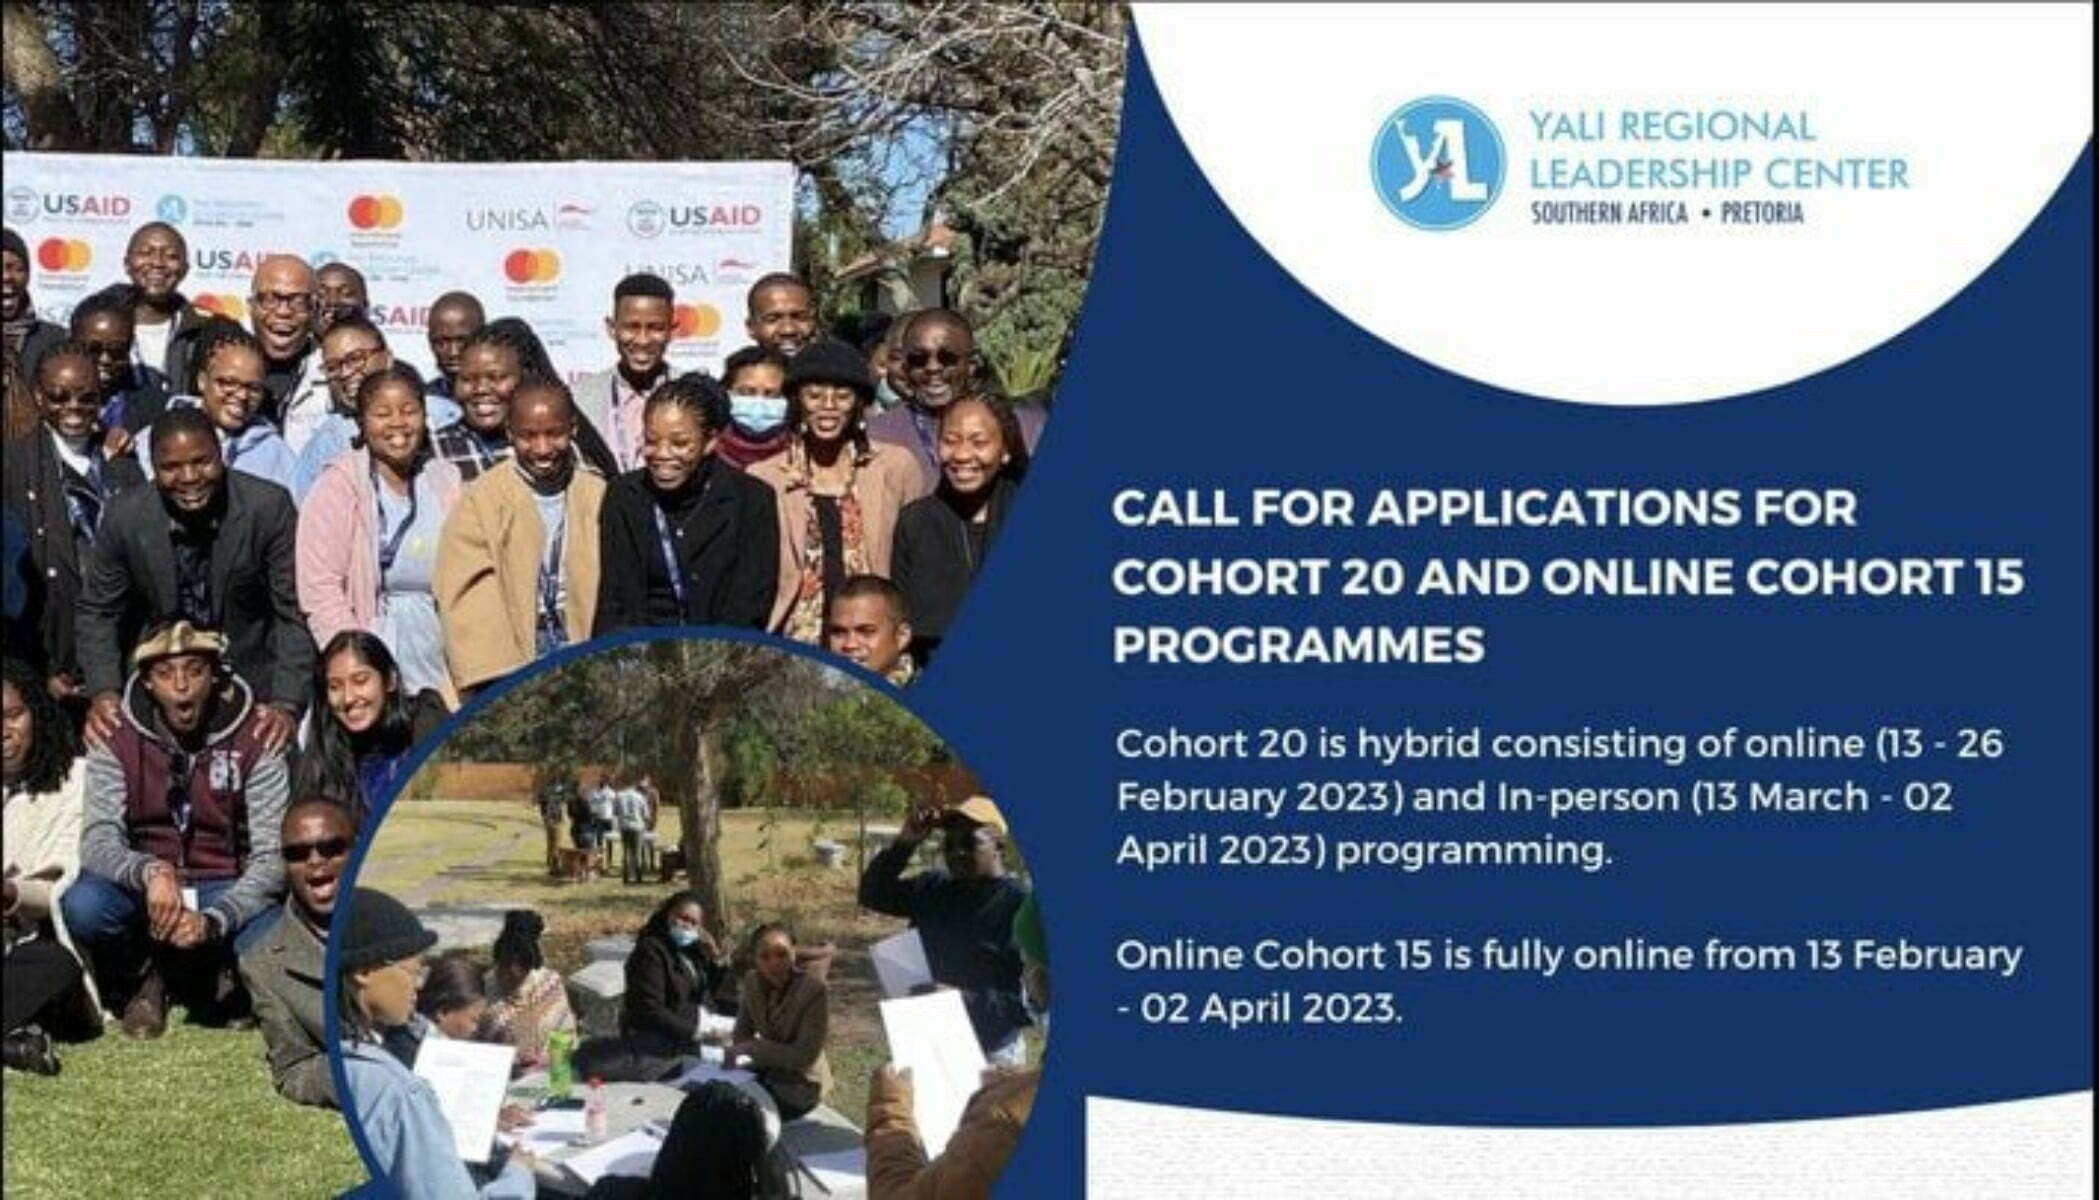 2023 YALI Southern Africa Regional Leadership Program for Africans